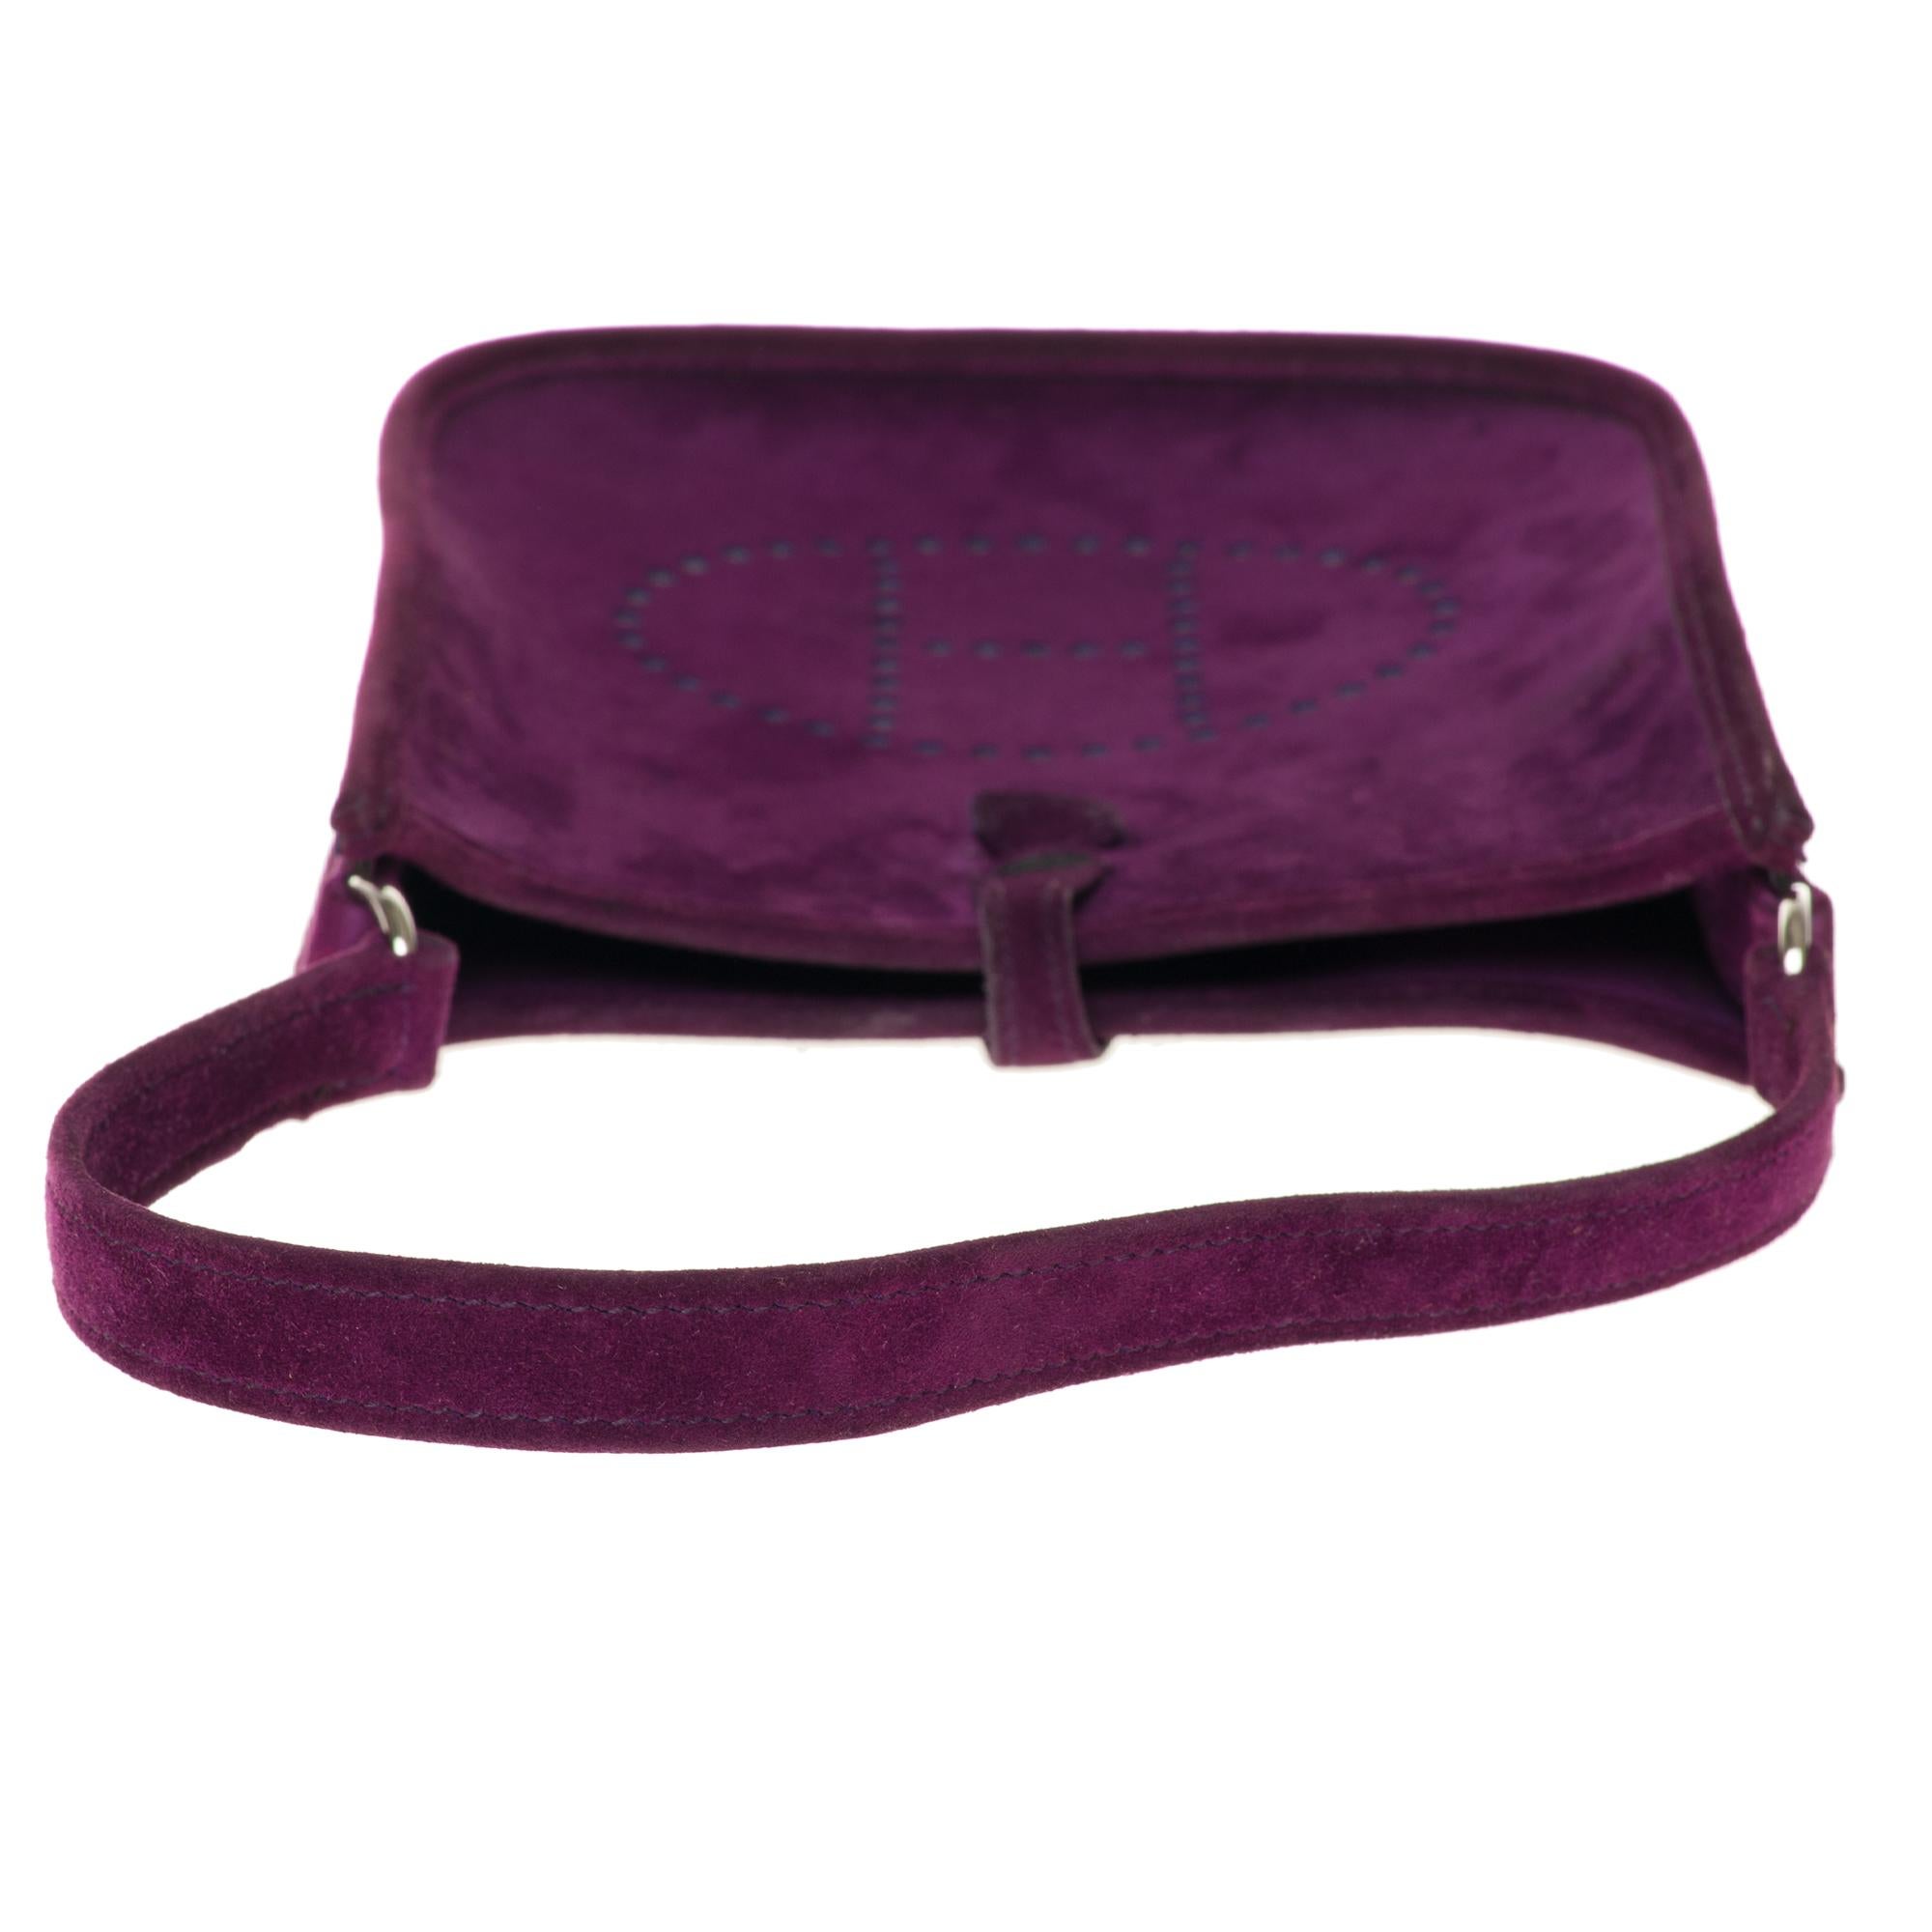 Rare Hermès Evelyne TPM handbag in purple suede, new condition ! 2